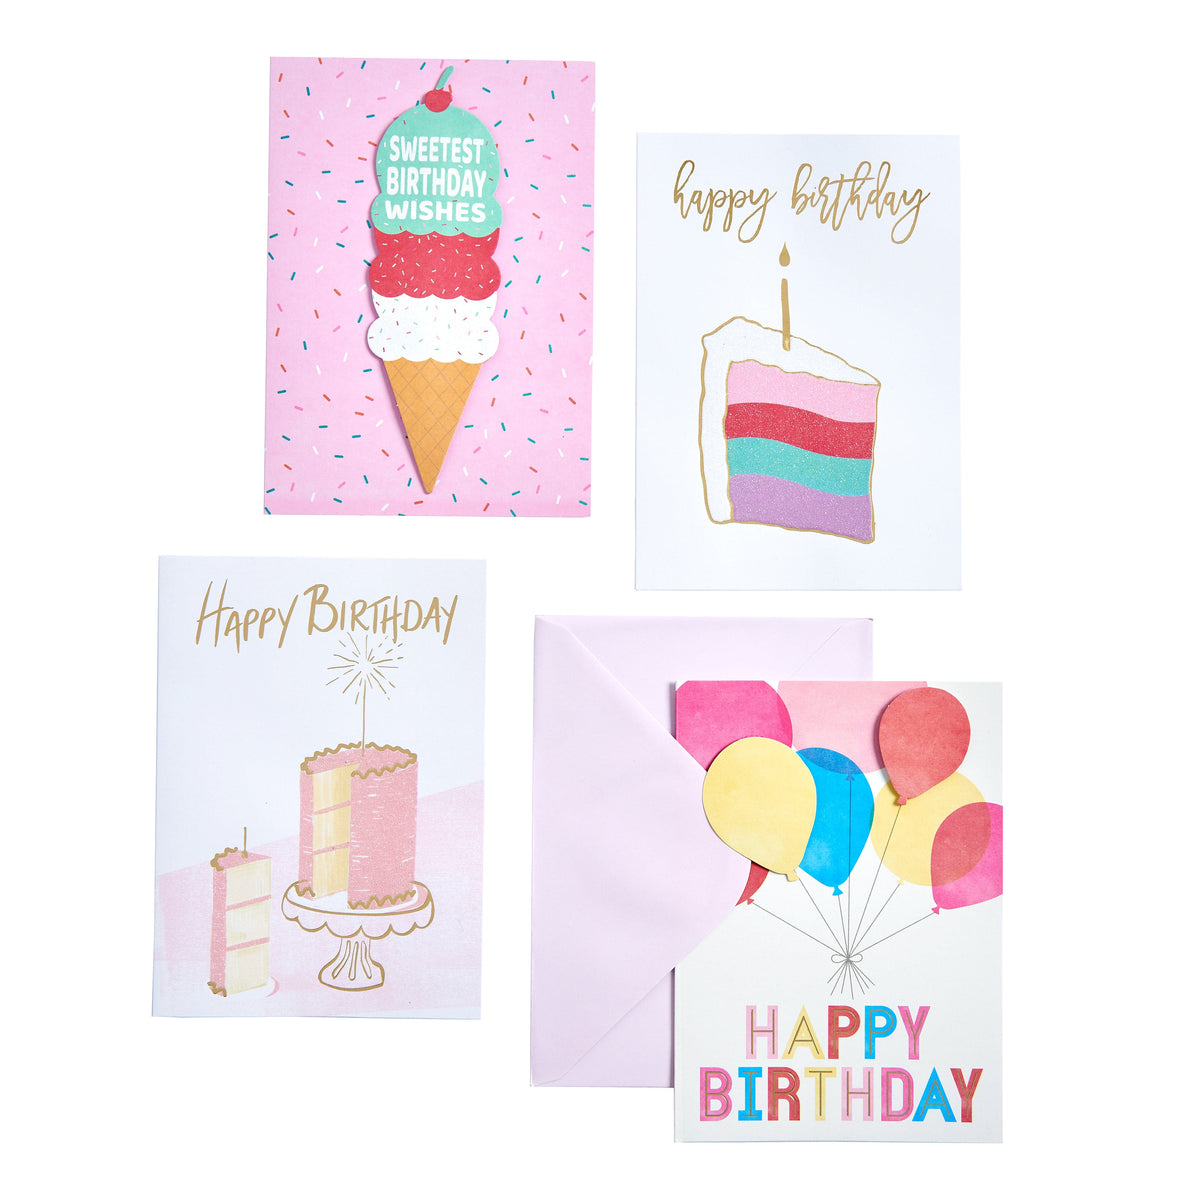 Sweetest Birthday Wishes - Greeting Card Kit Gartner Studios Greeting Cards 93361